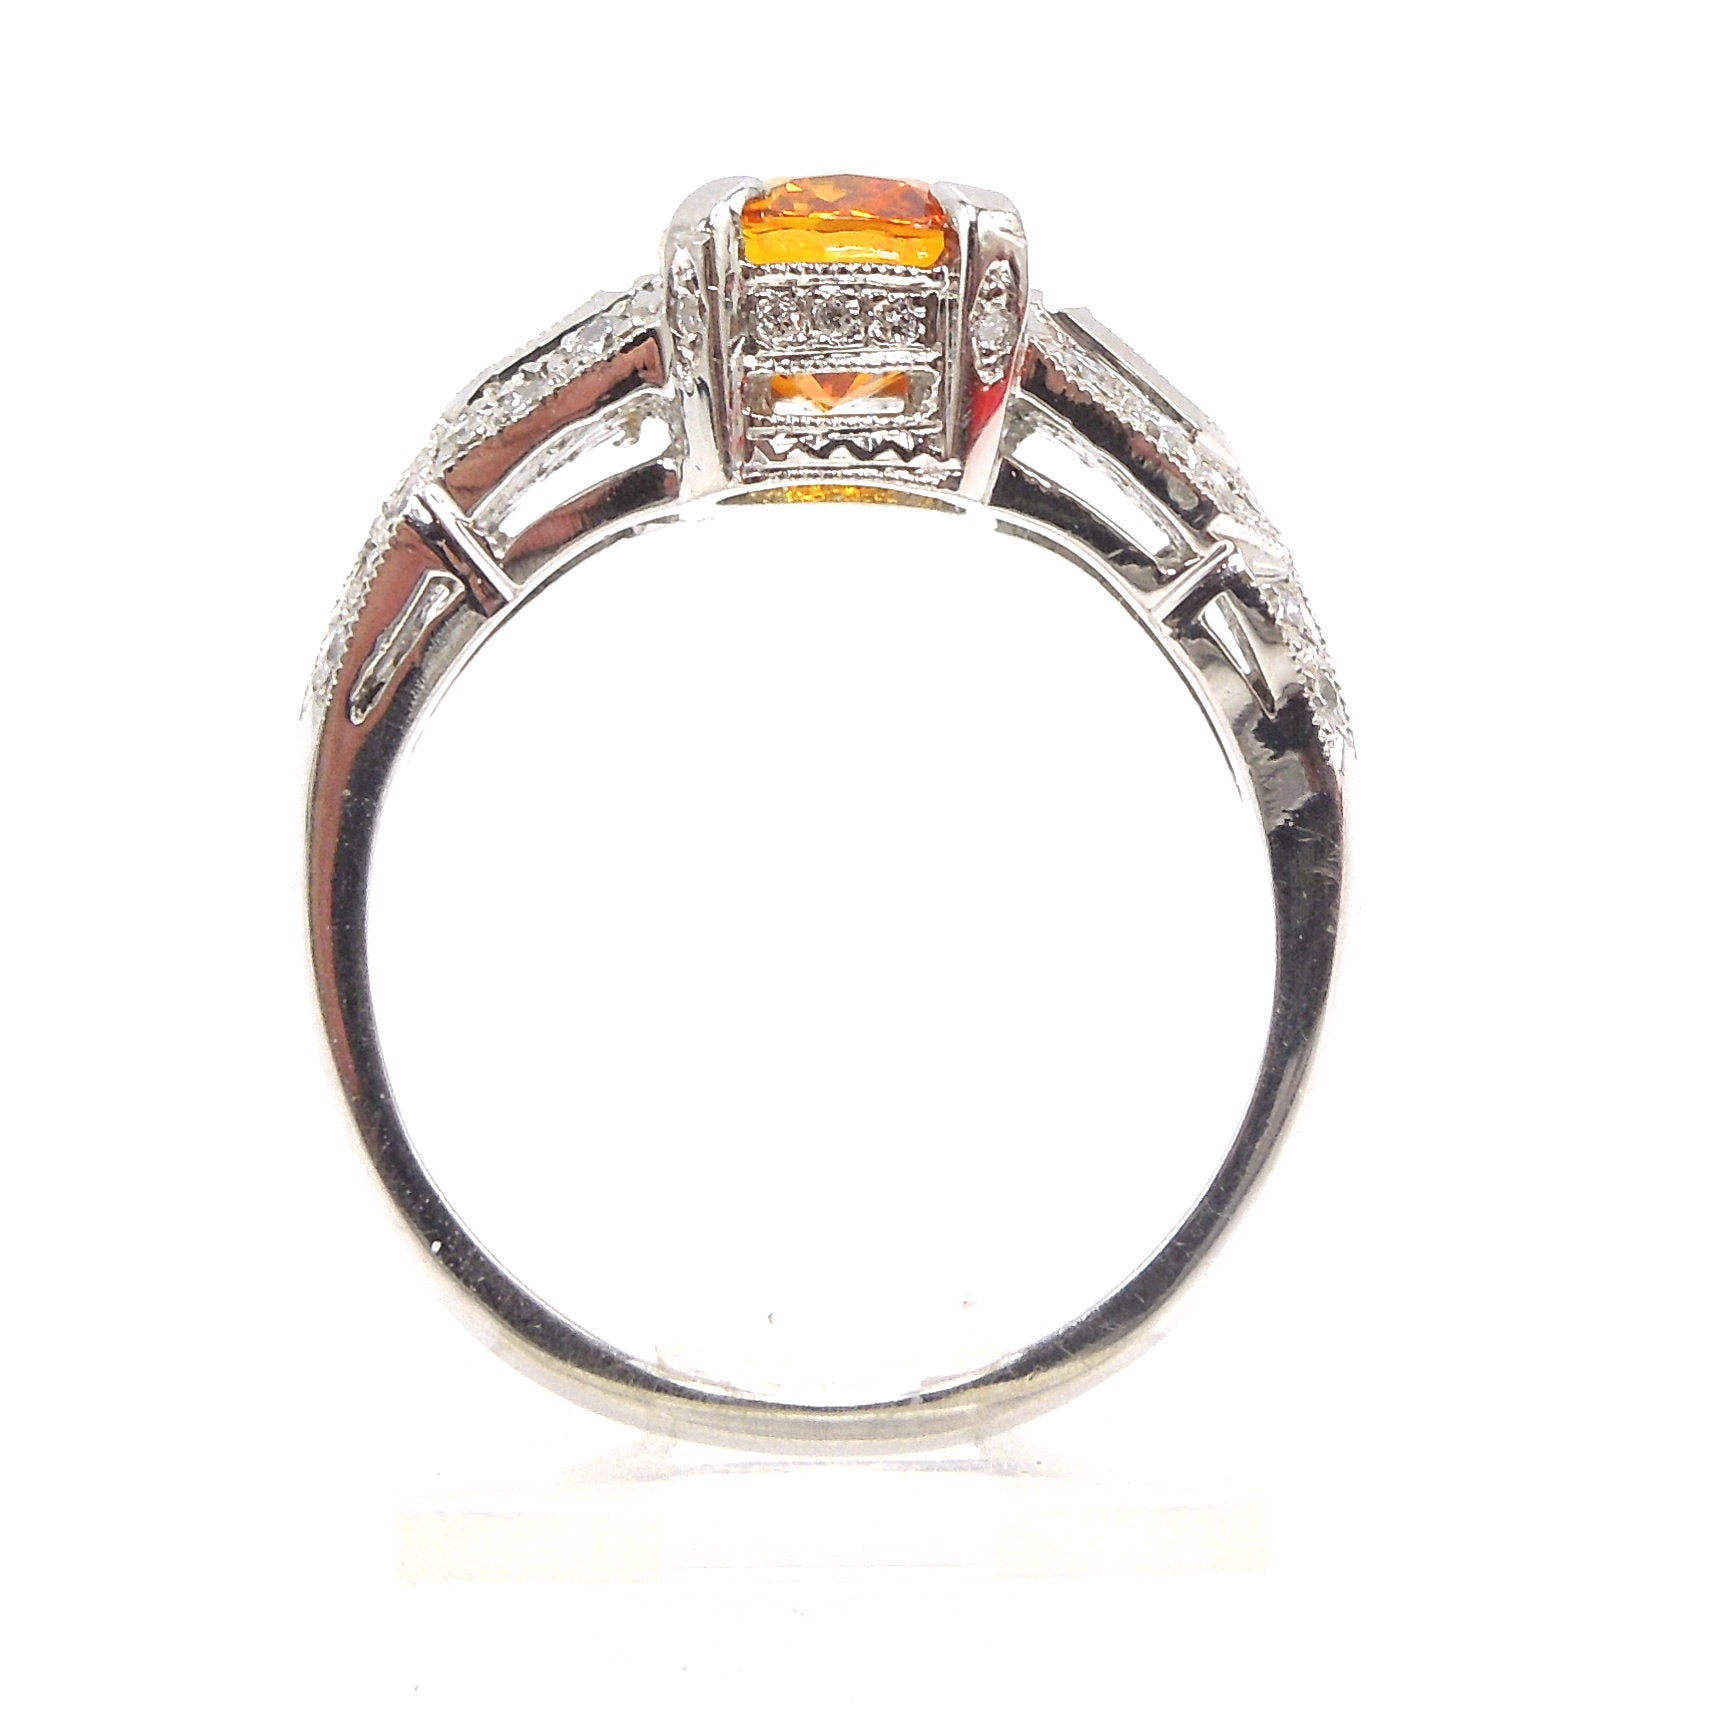 2.03 Carat Oval Cut Orange Sapphire in Art Deco Style Ring in Platinum